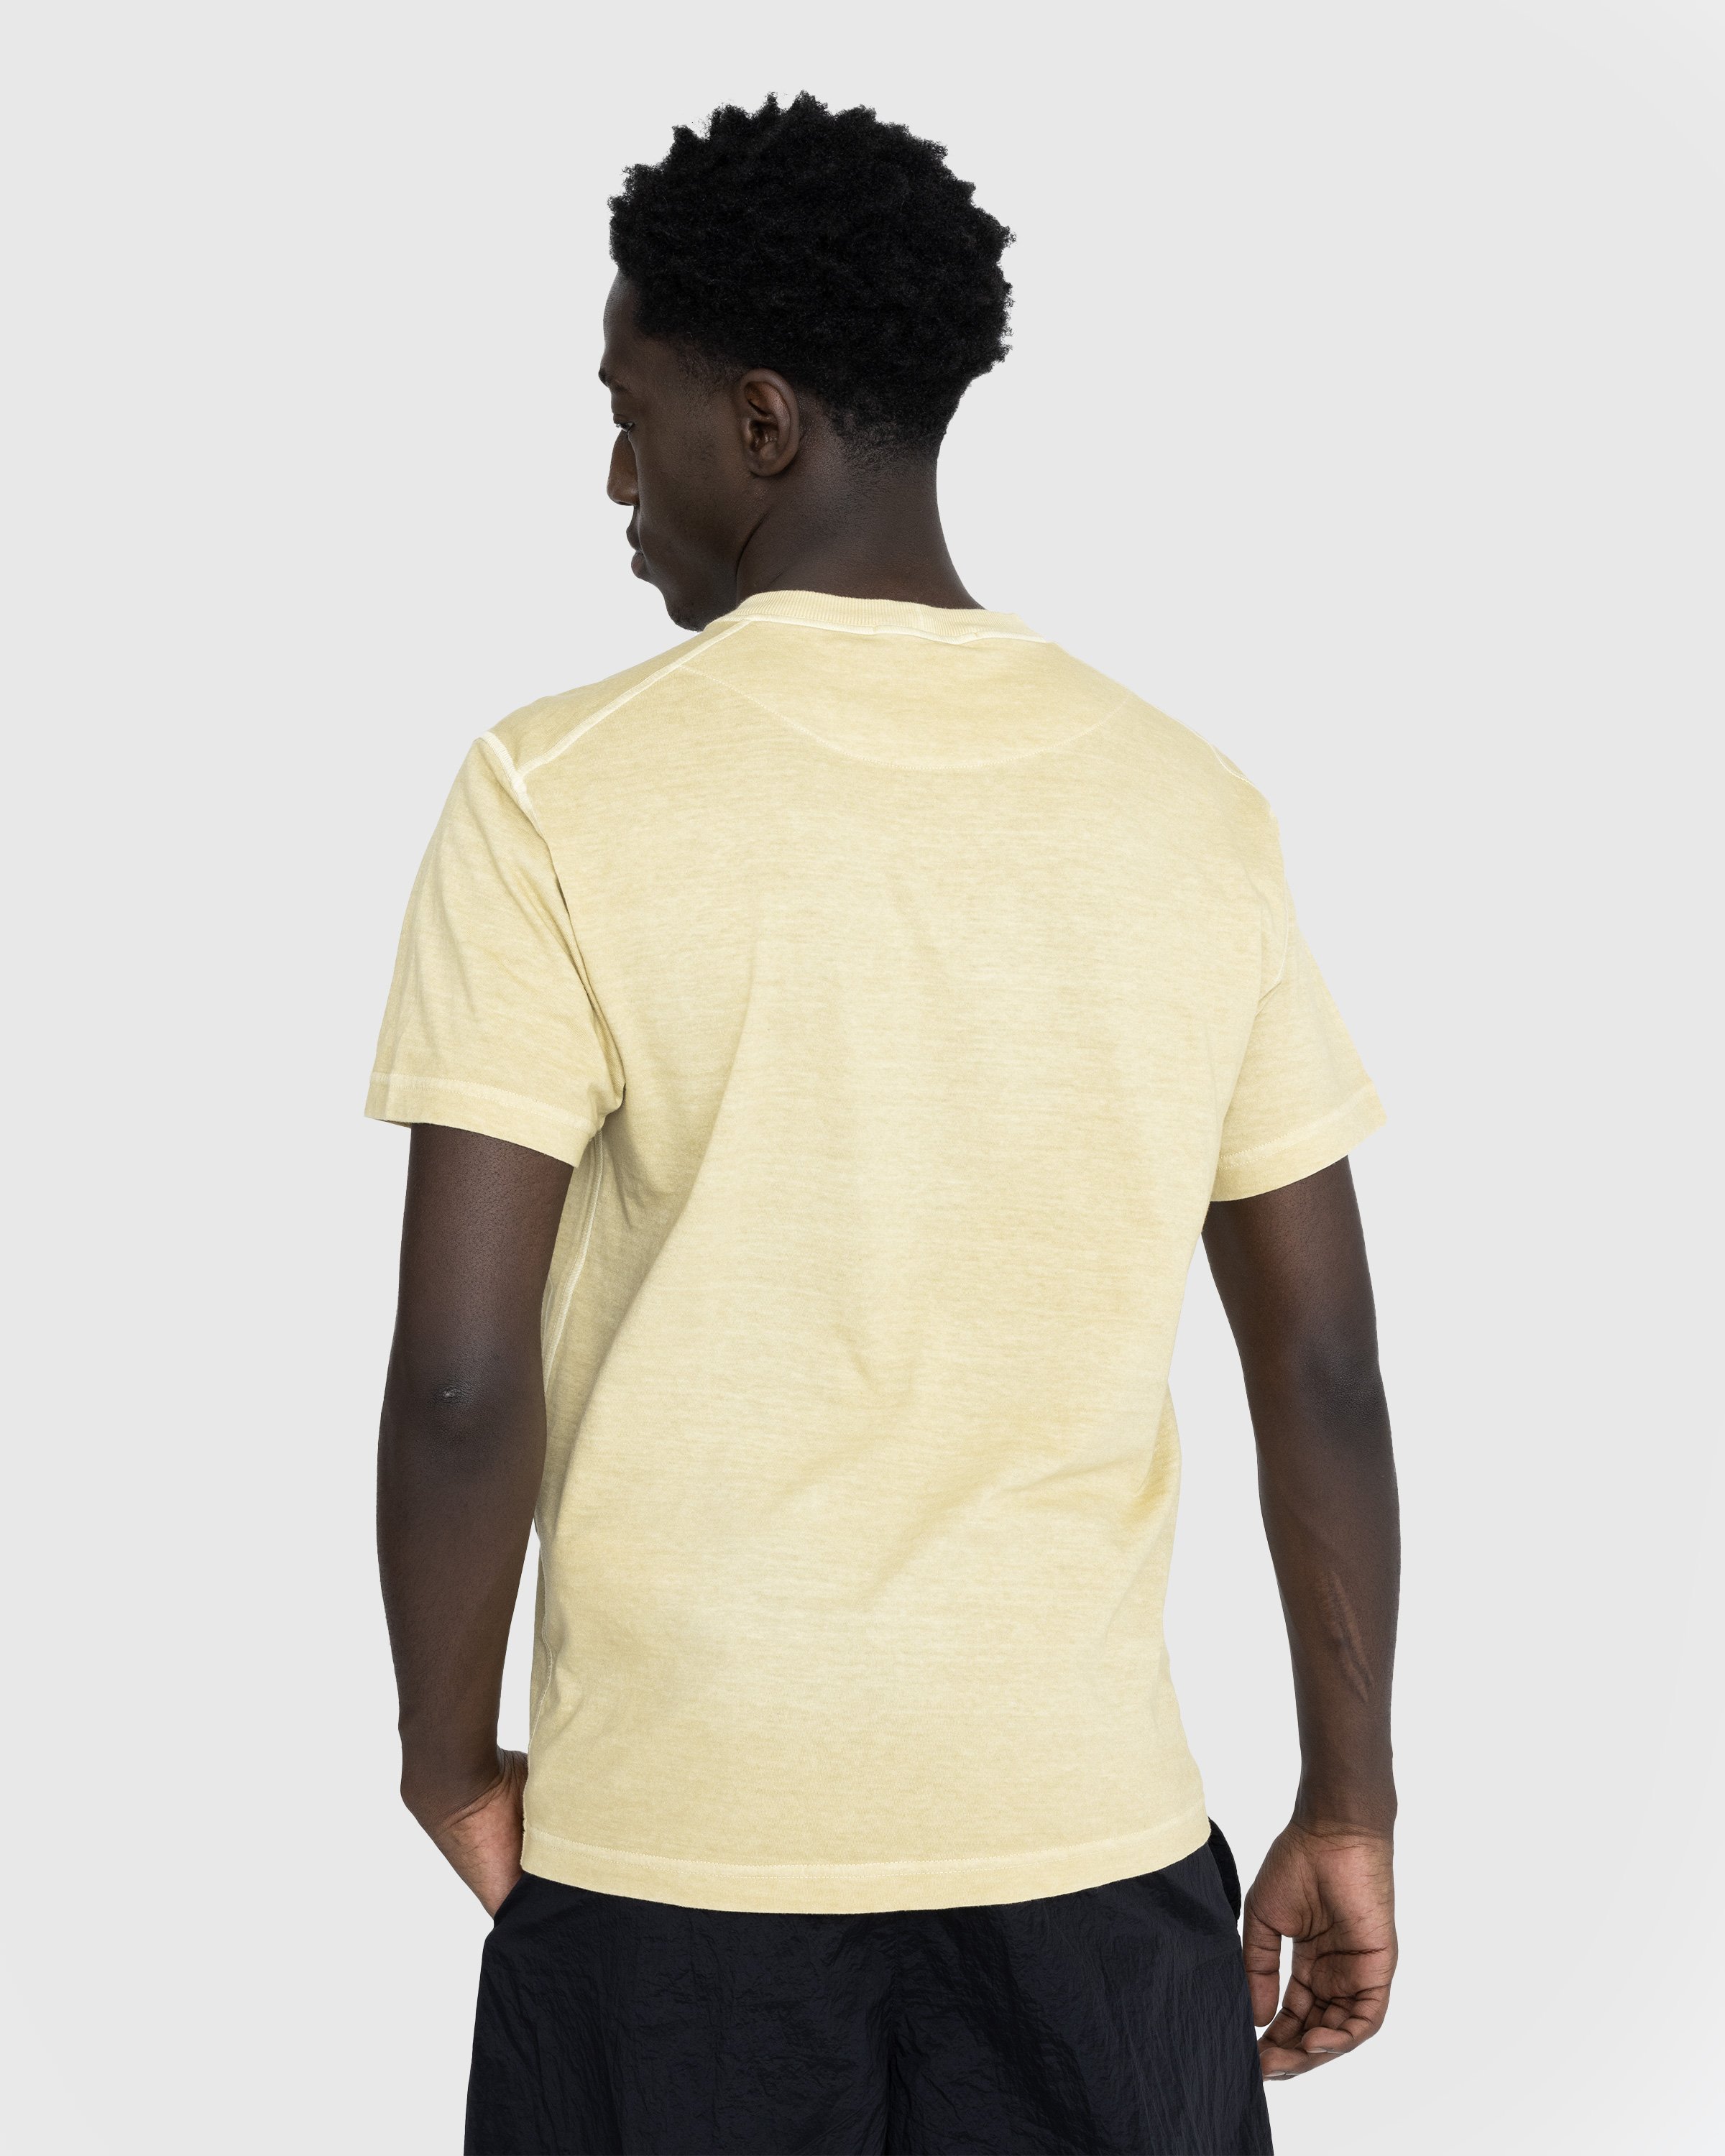 Stone Island - Fissato T-Shirt Natural Beige - Clothing - Beige - Image 3